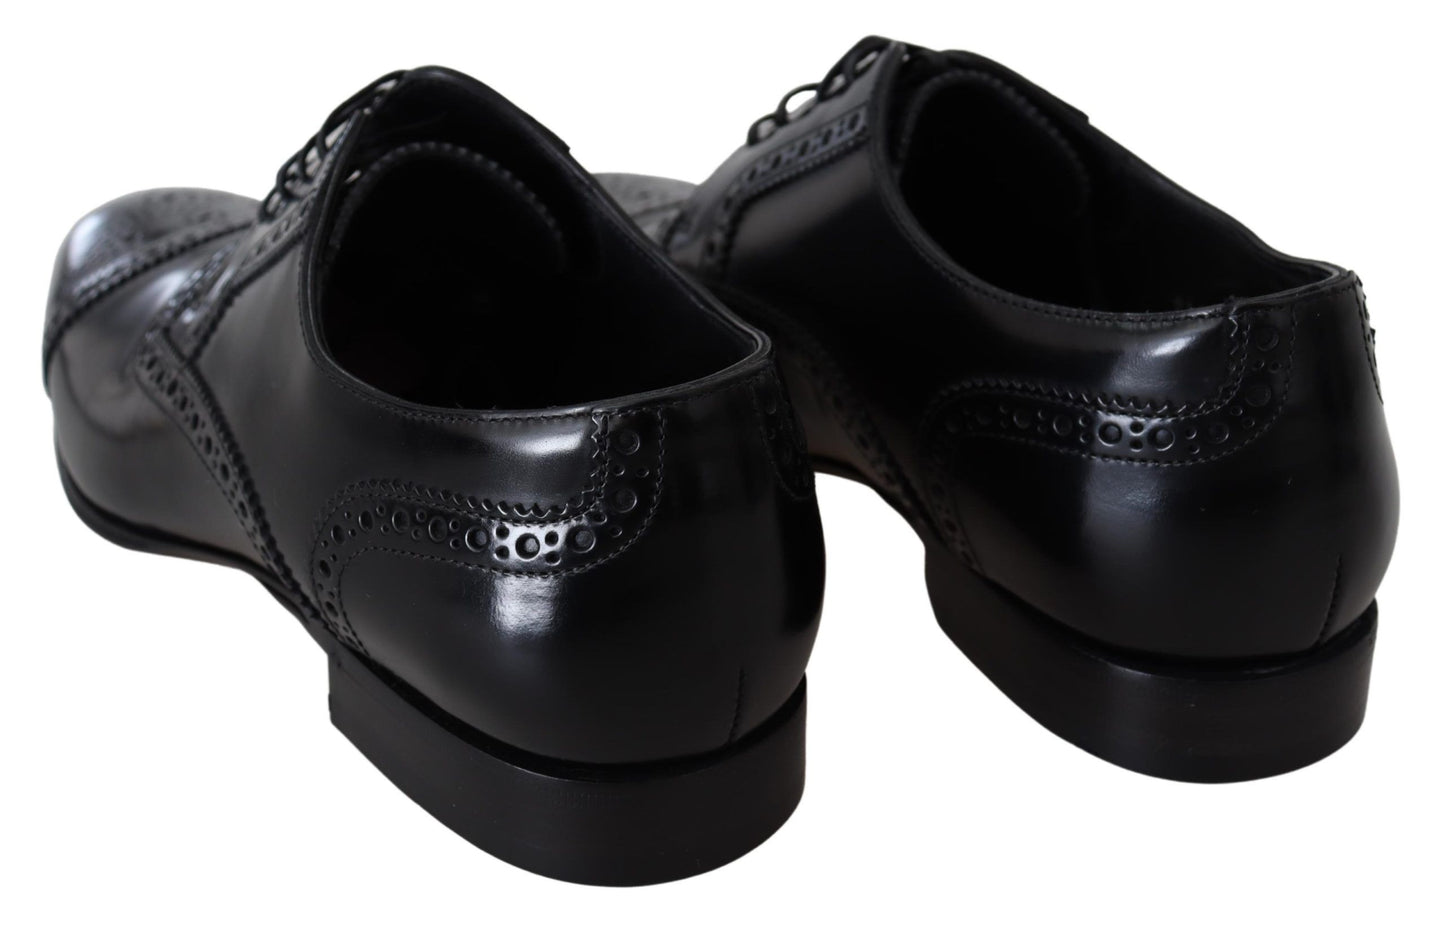 Dolce & Gabbana Black Leather Men Derby Formal Loafers Shoes